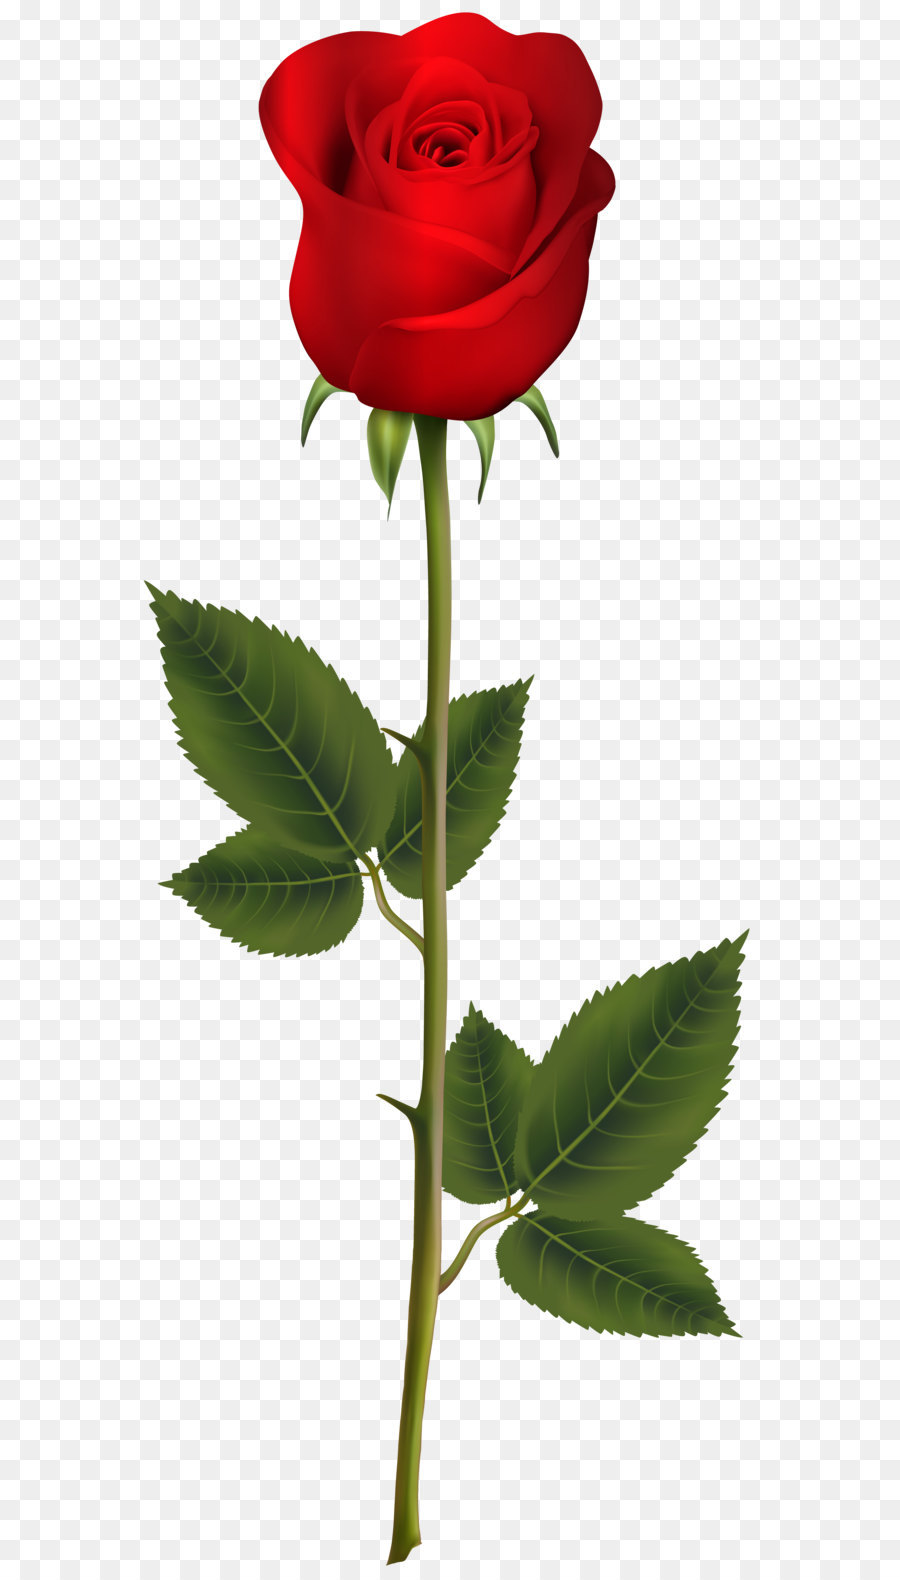 Blue rose Artificial flower - Red Rose with Stem PNG Transparent Clip Art Image png download - 3303*8000 - Free Transparent Blue Rose png Download.